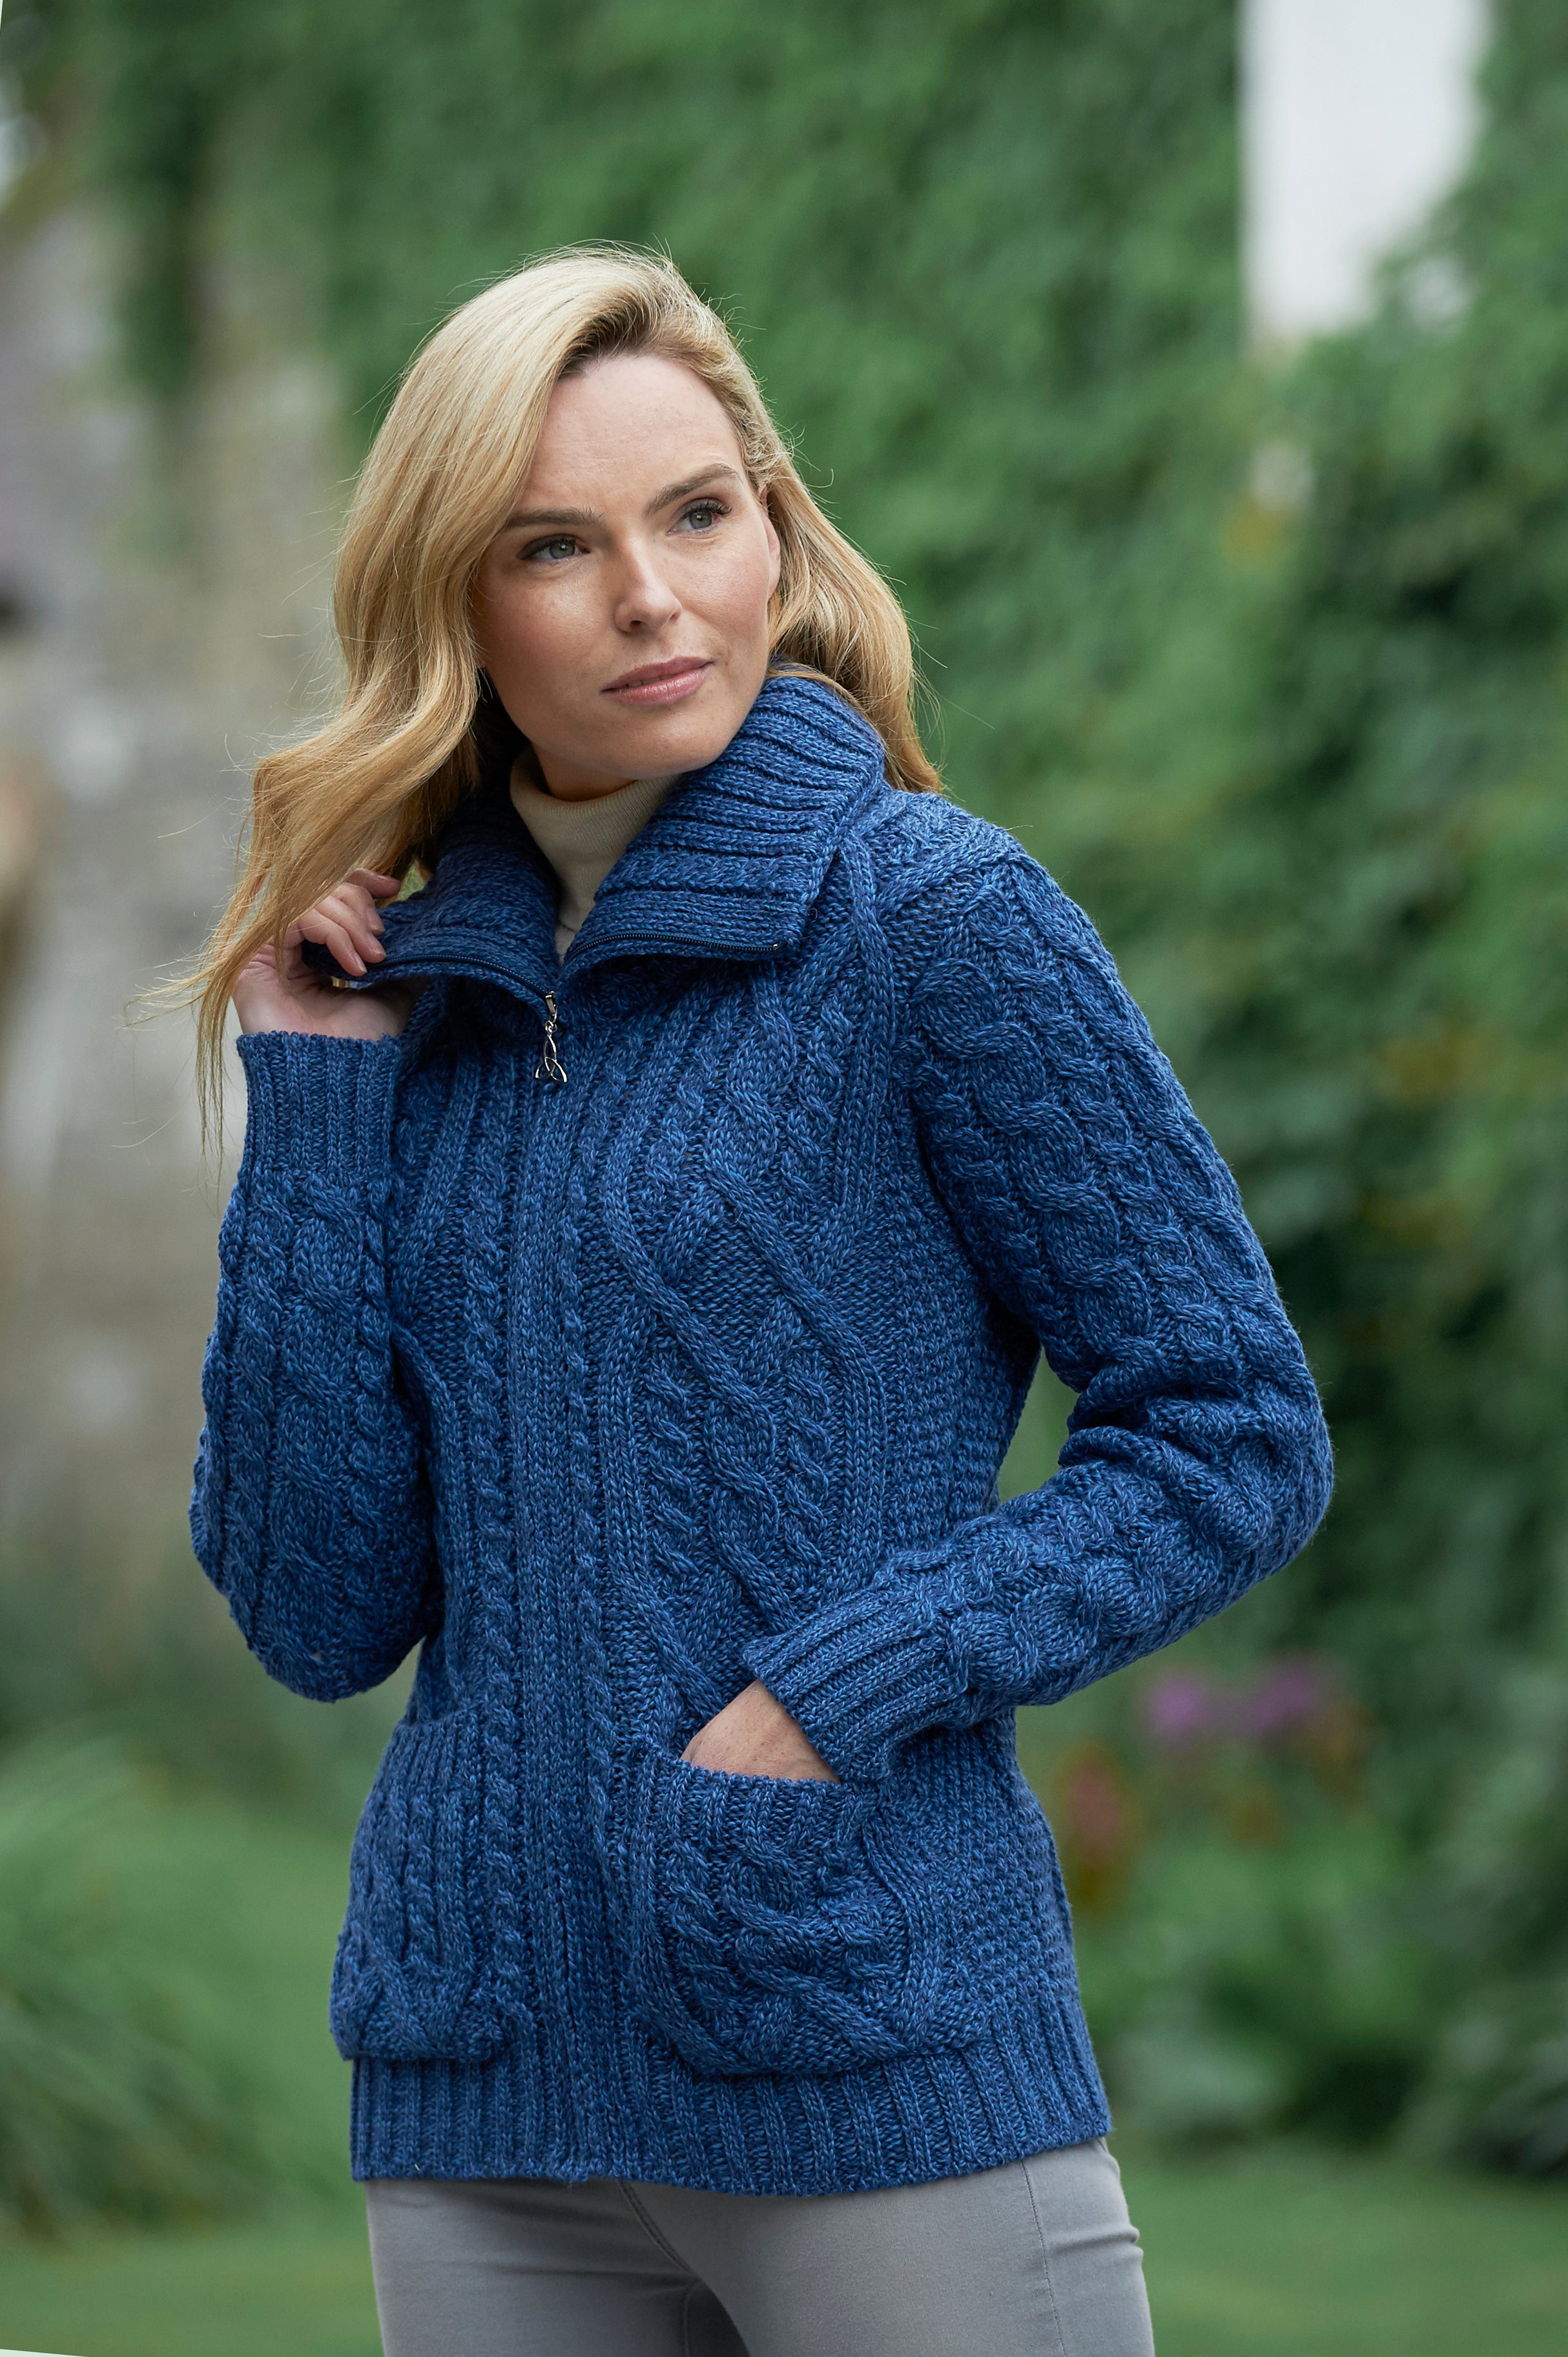 Men's Irish Cowlneck Pullover Sweater - Blue - XX-Large